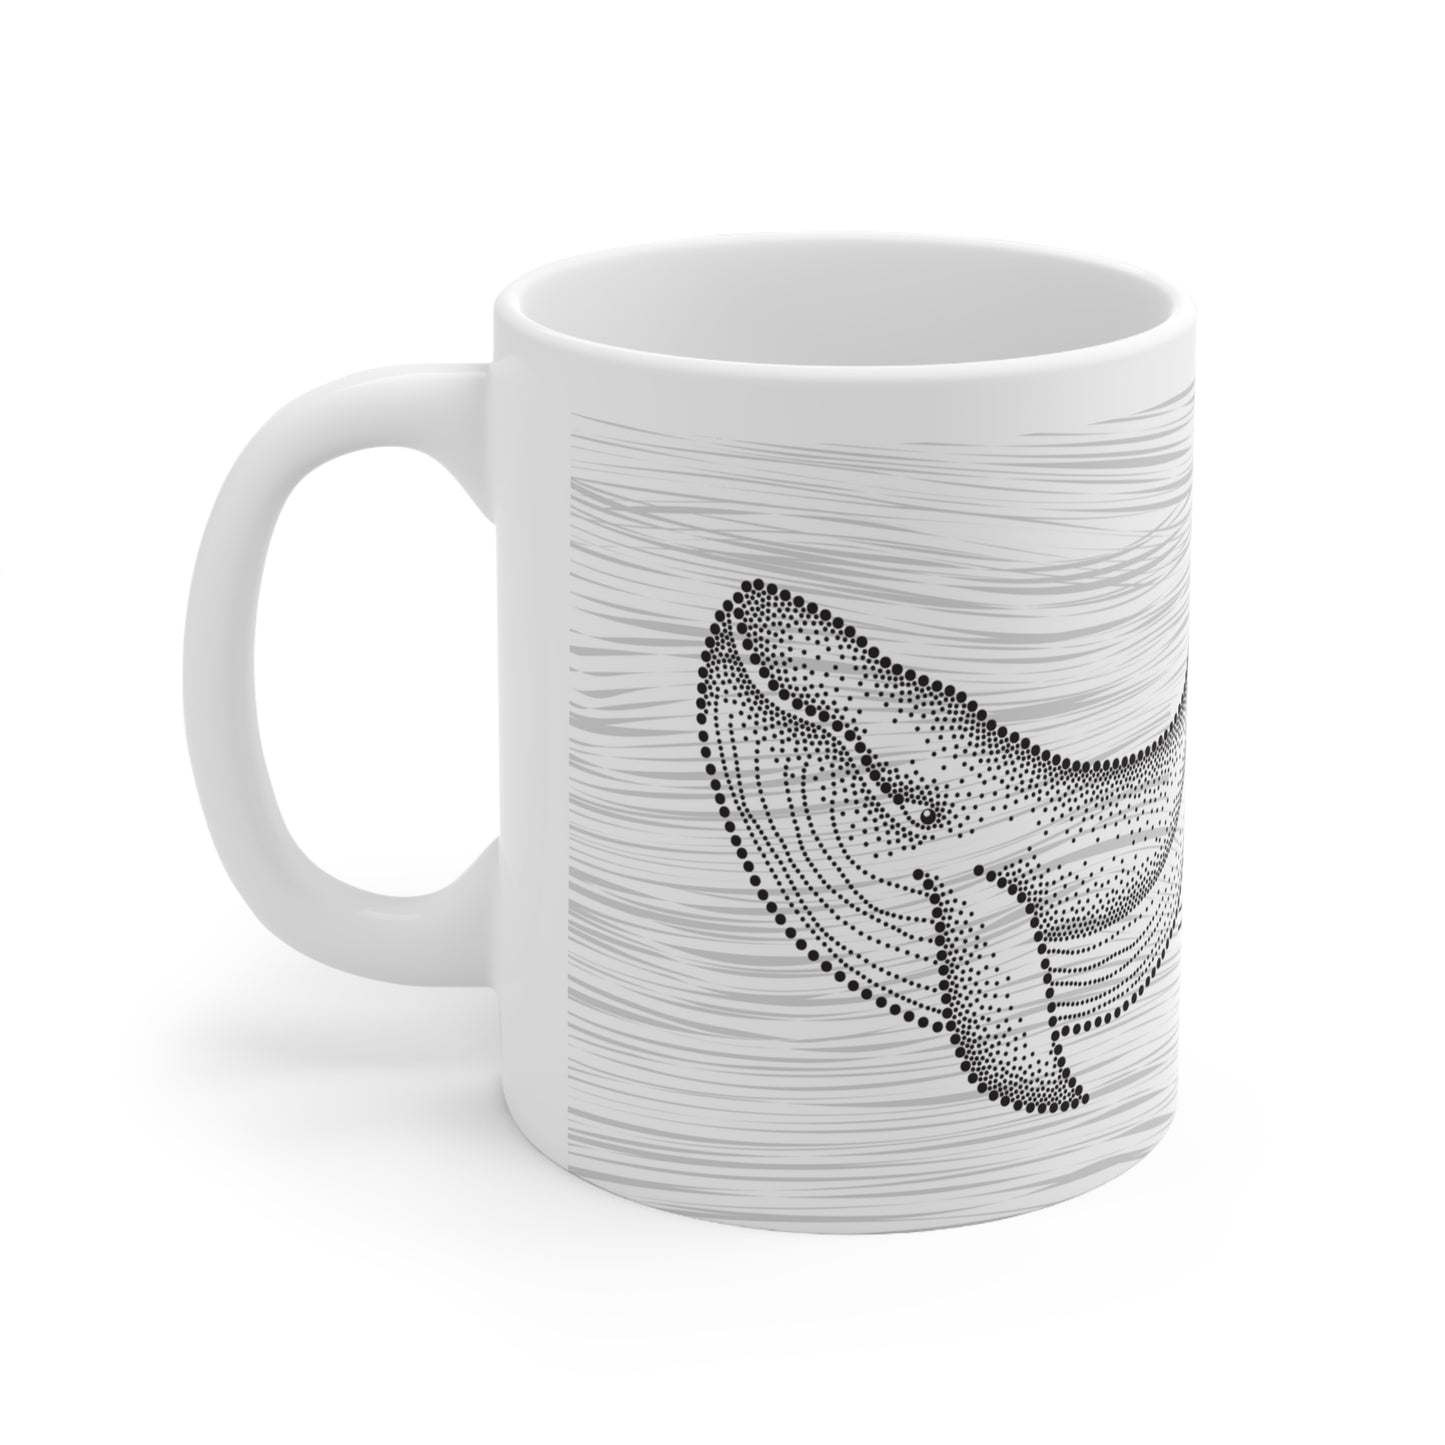 Whale Poop Ceramic Mug 11oz